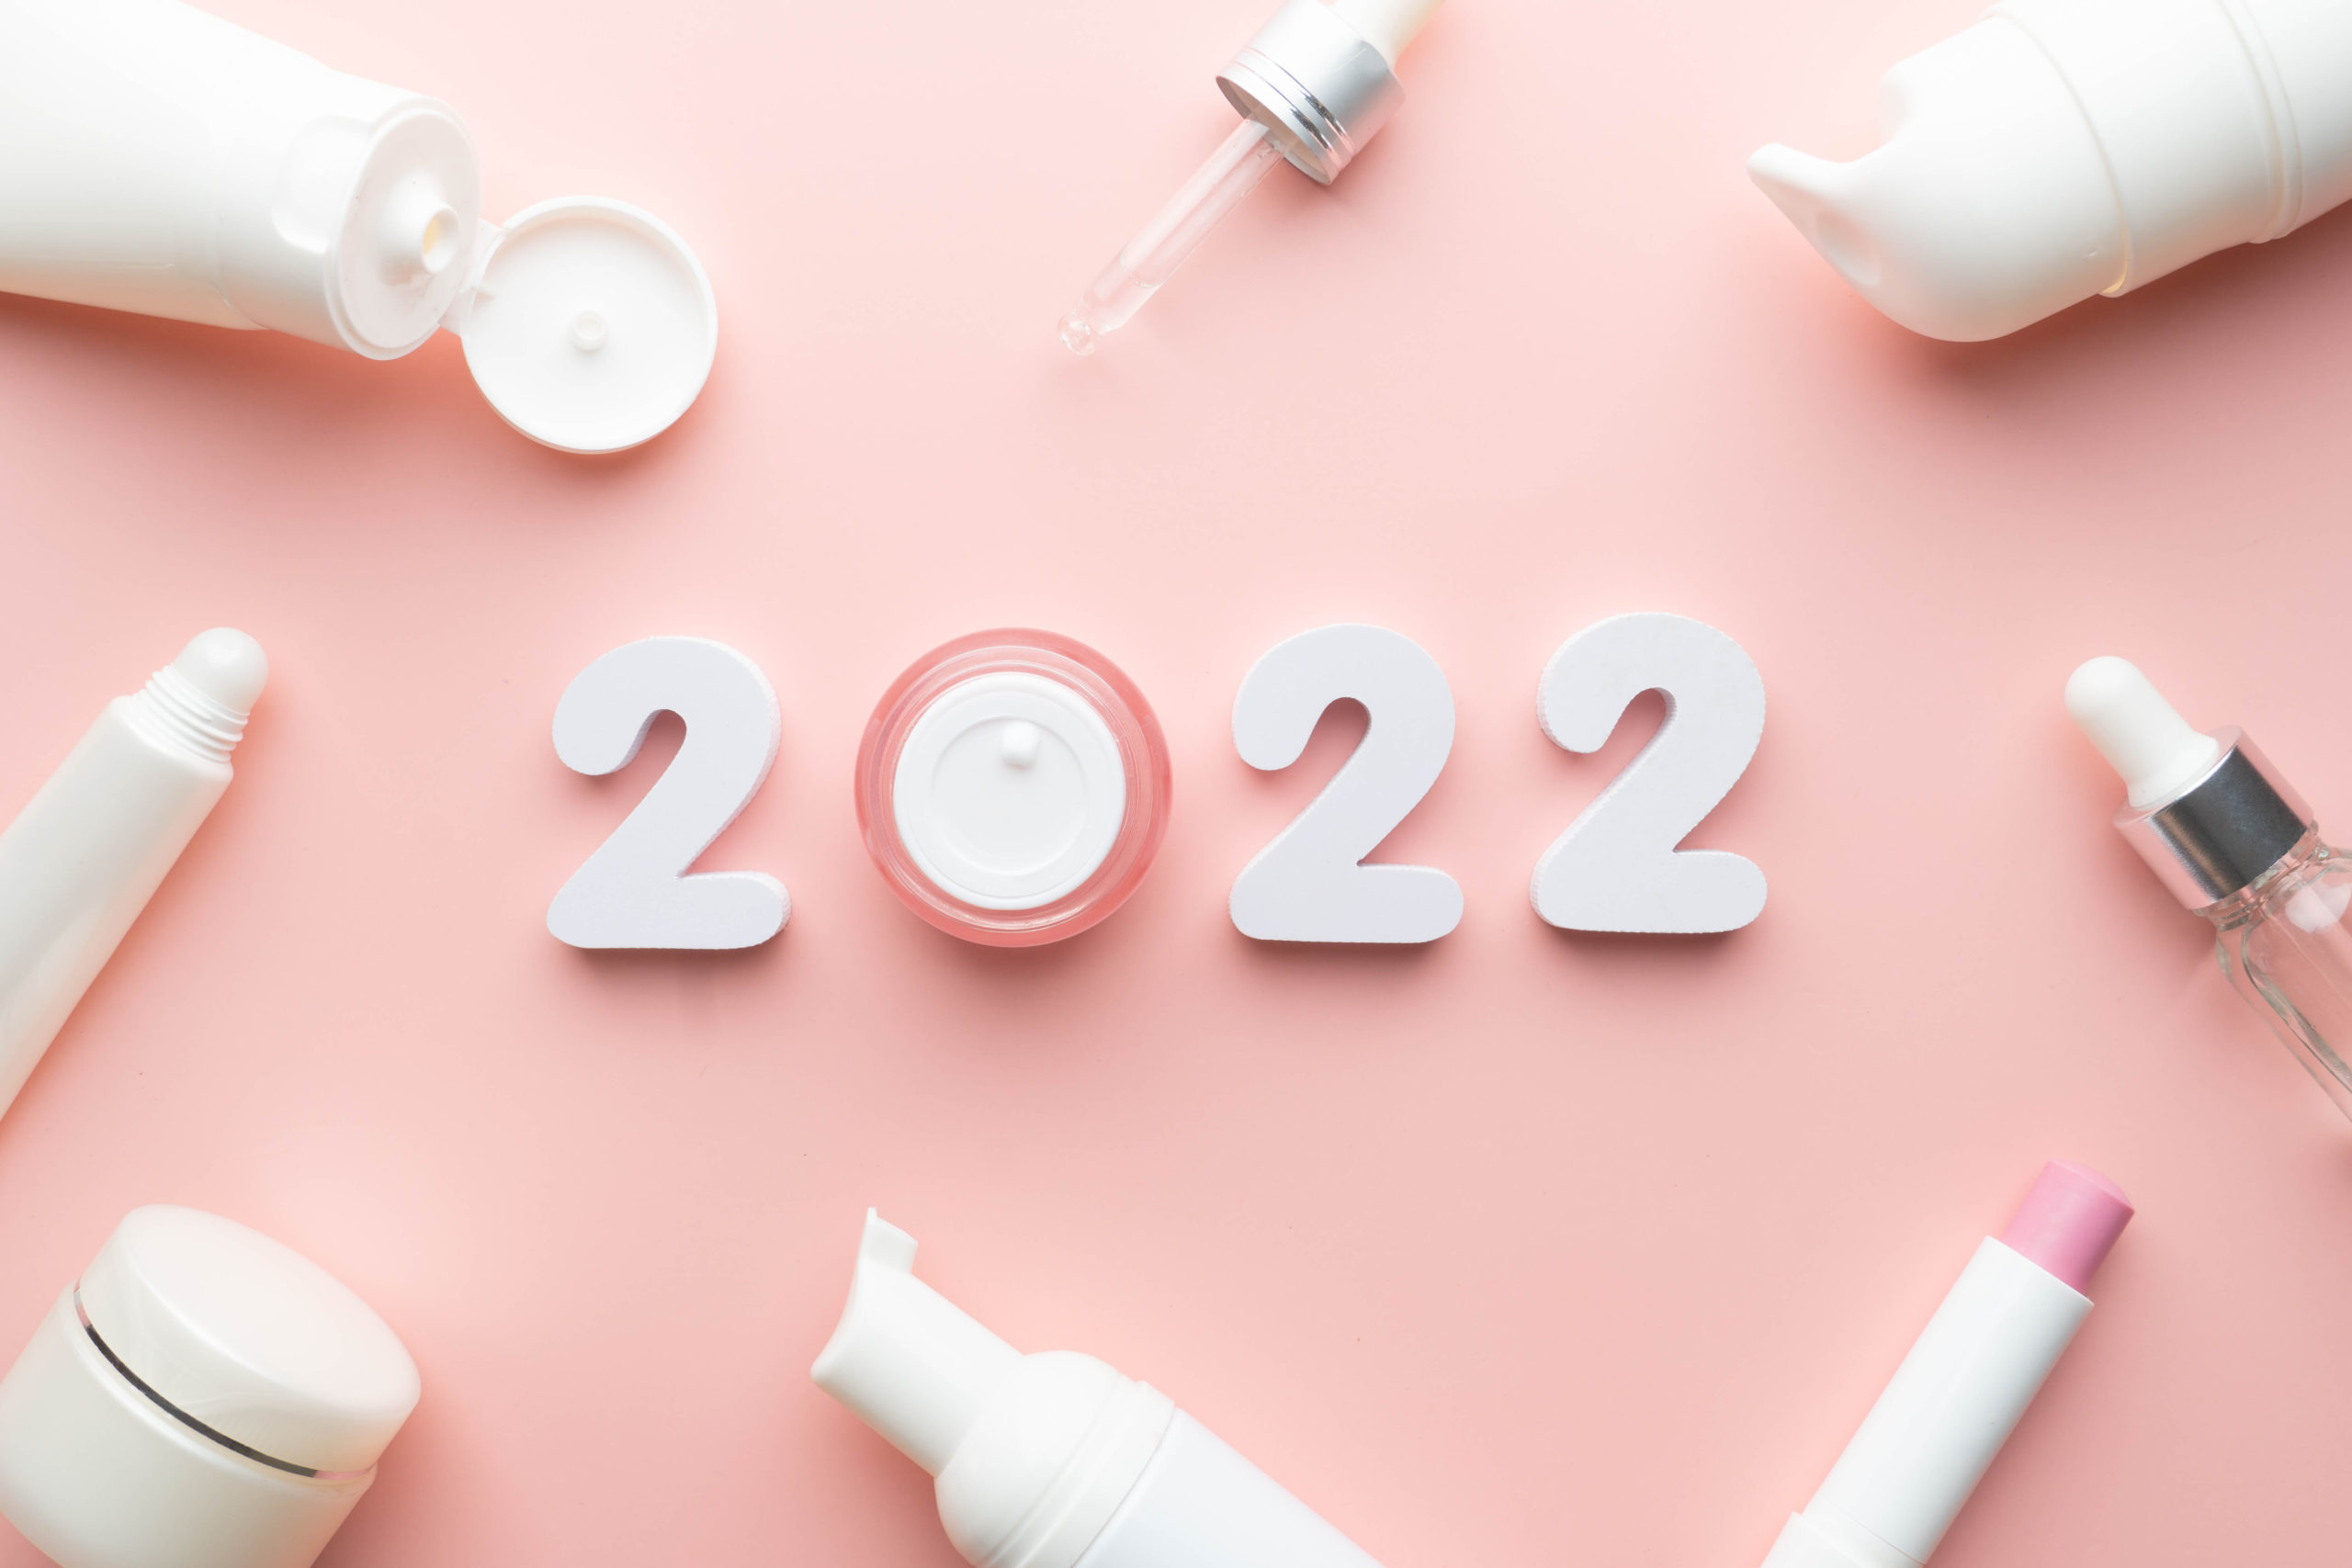 Trending Aesthetics Treatments for 2022